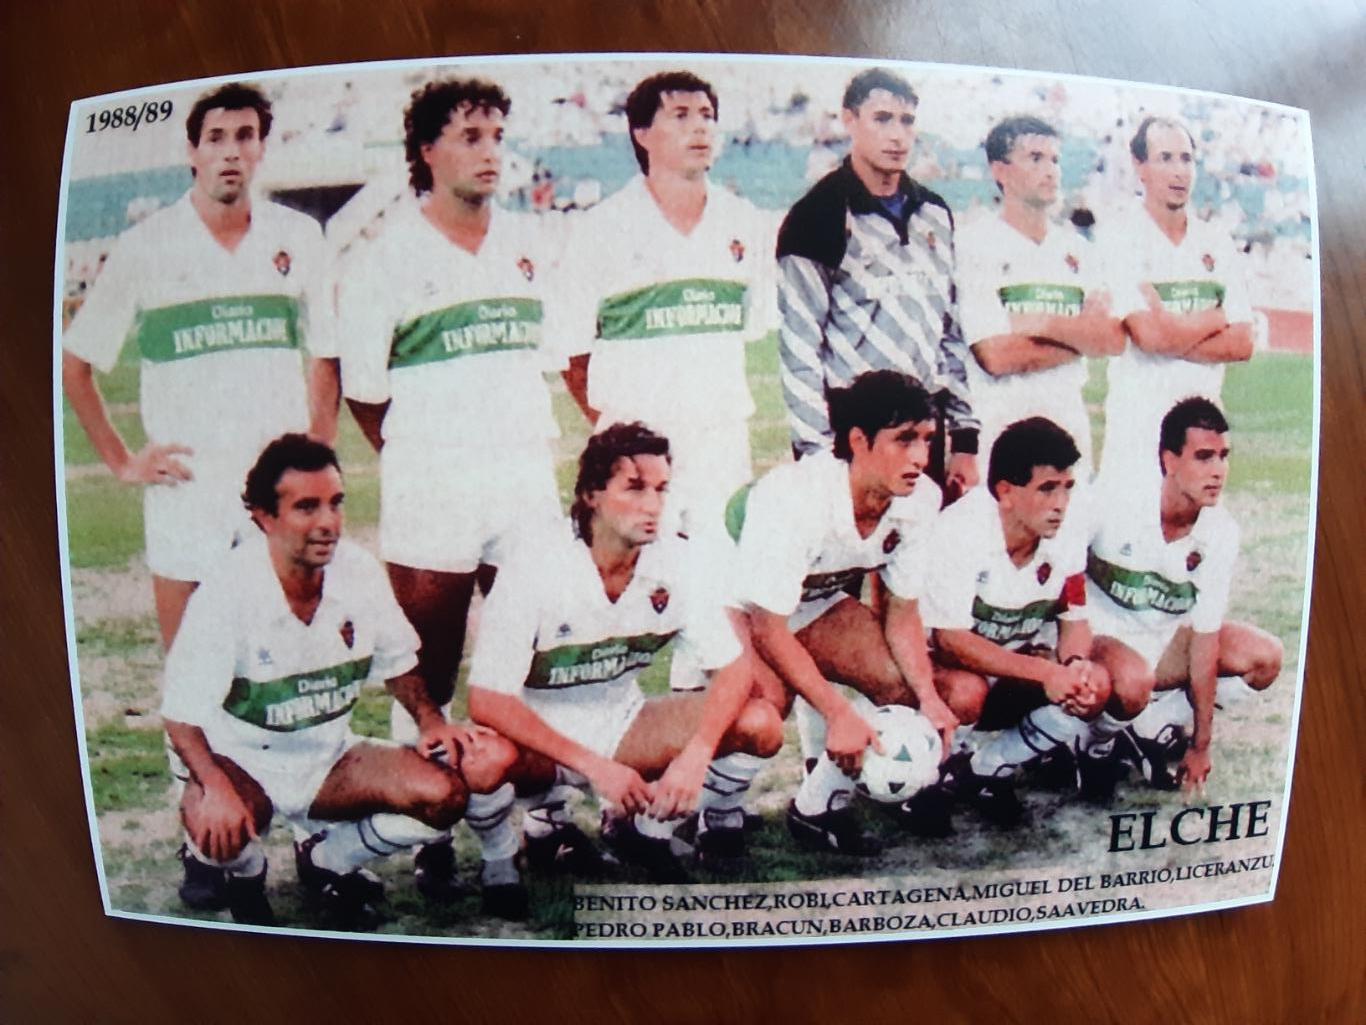 ELCHE 1988/89(SPAIN)